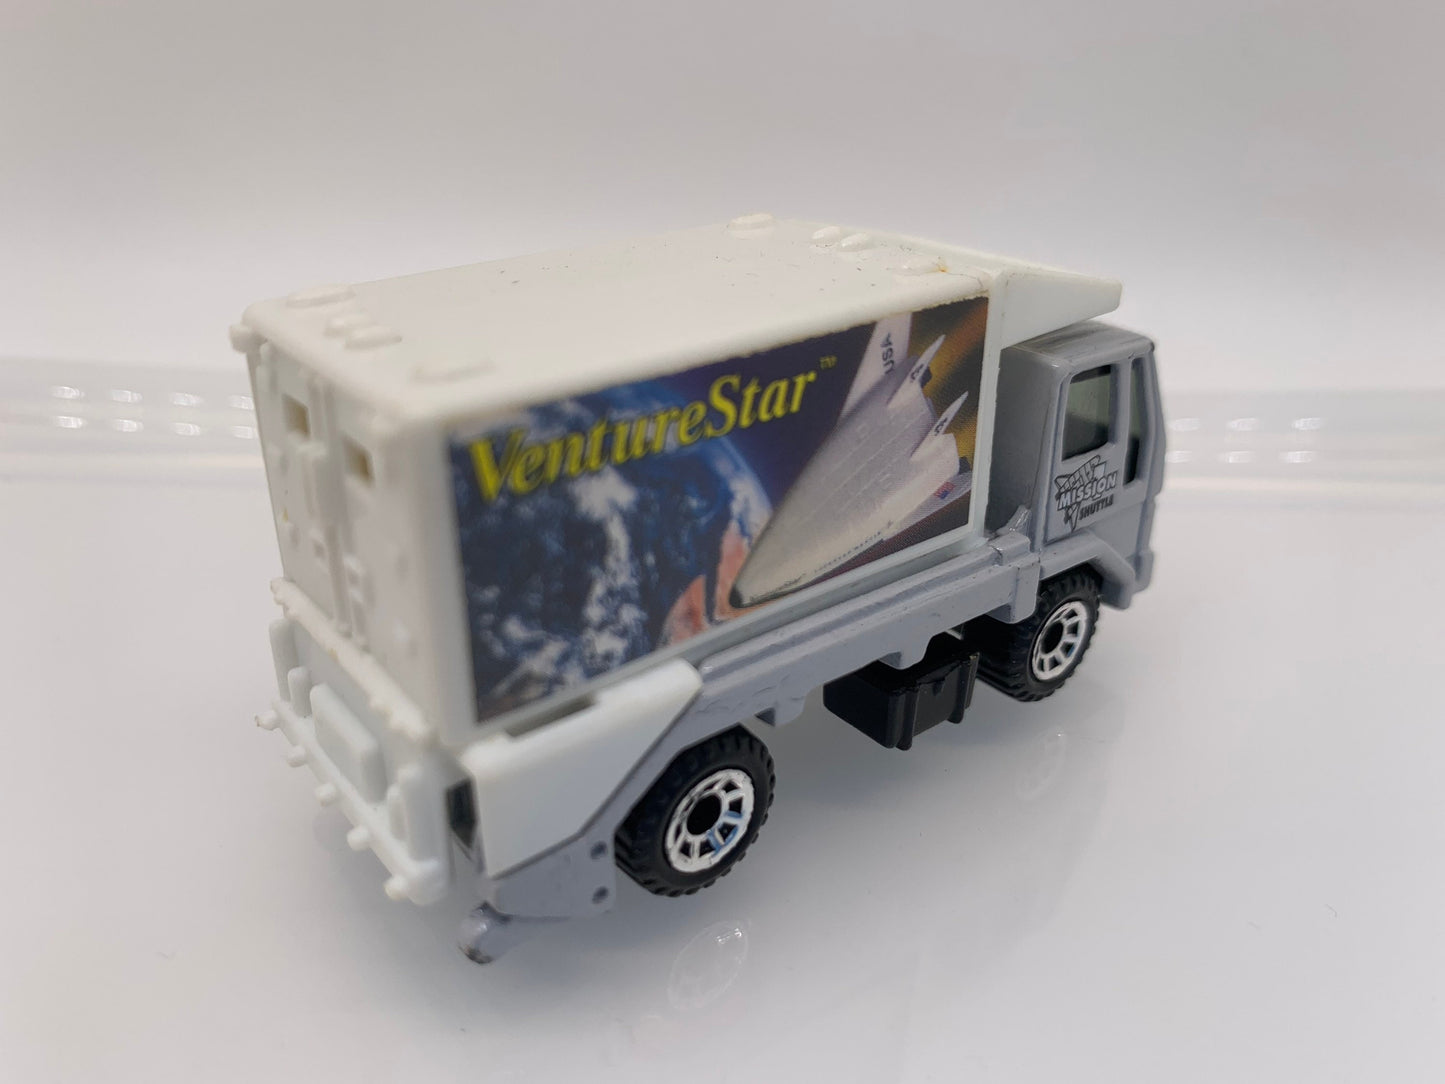 Mission Shuttle Scissor Truck - Venture Star Truck - Space Explorer - Diecast Vintage - Toy Car - Matchbox Superfast Lesney - Matchbox